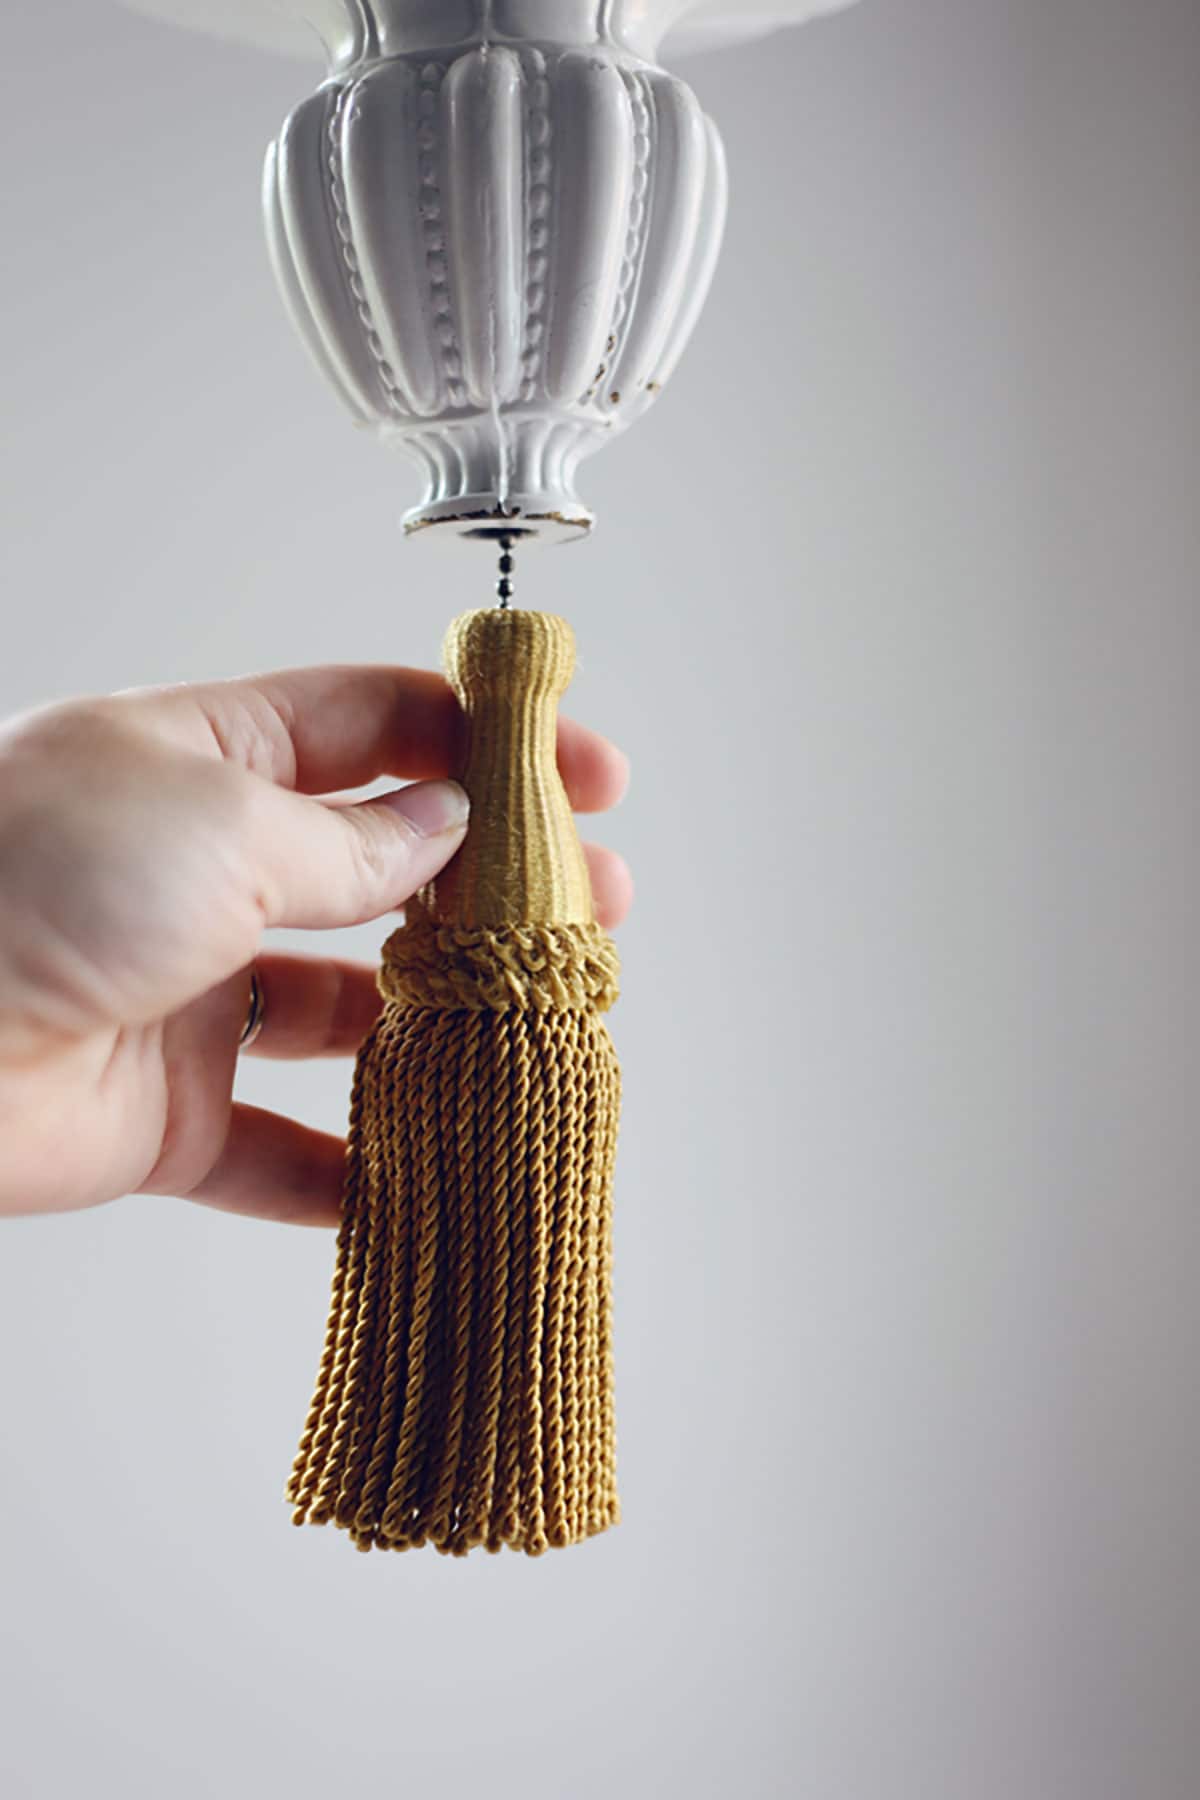 Wireless smart lightbulbs for your home